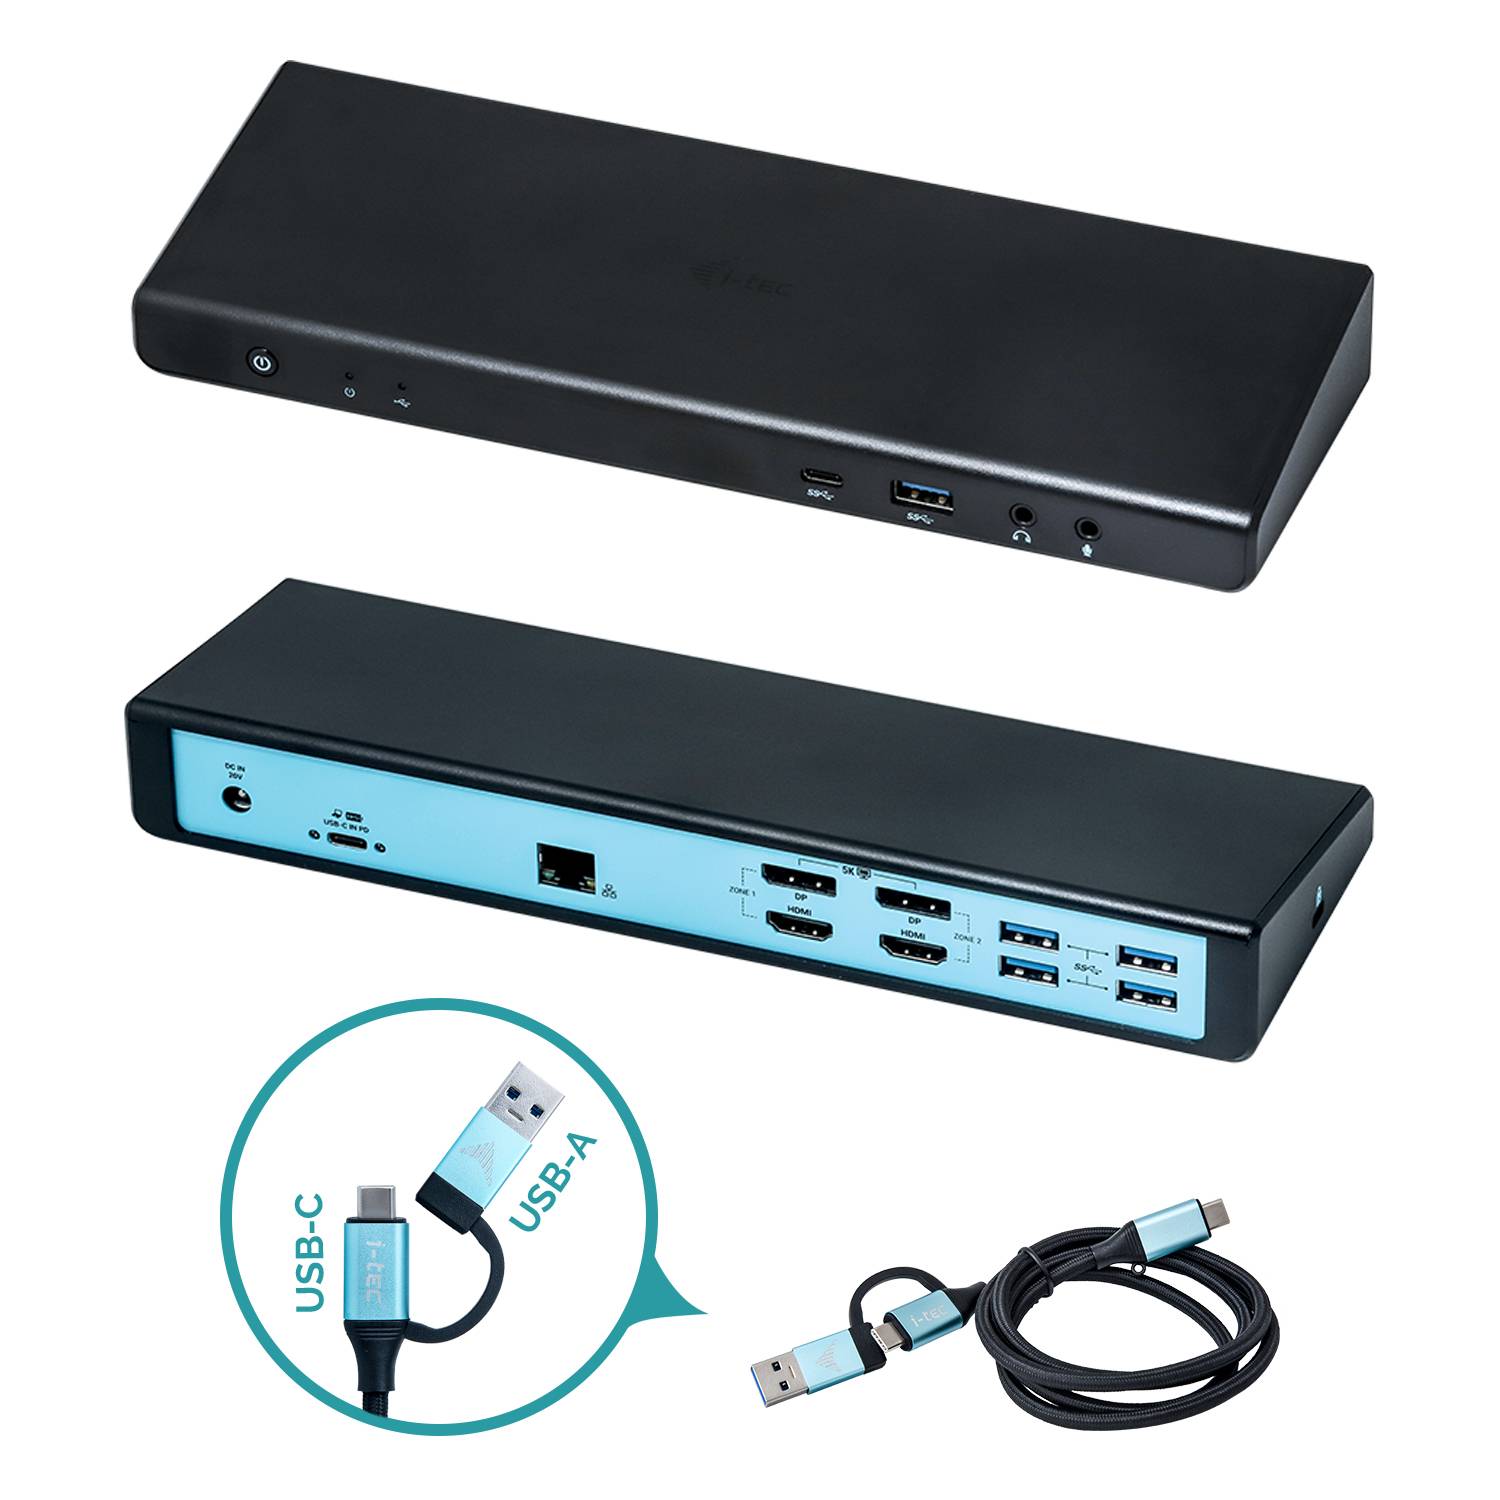 Rca Informatique - Image du produit : I-TEC USB 3.0/ USB-C DUAL DOCKING STATION + POWER DELIVERY